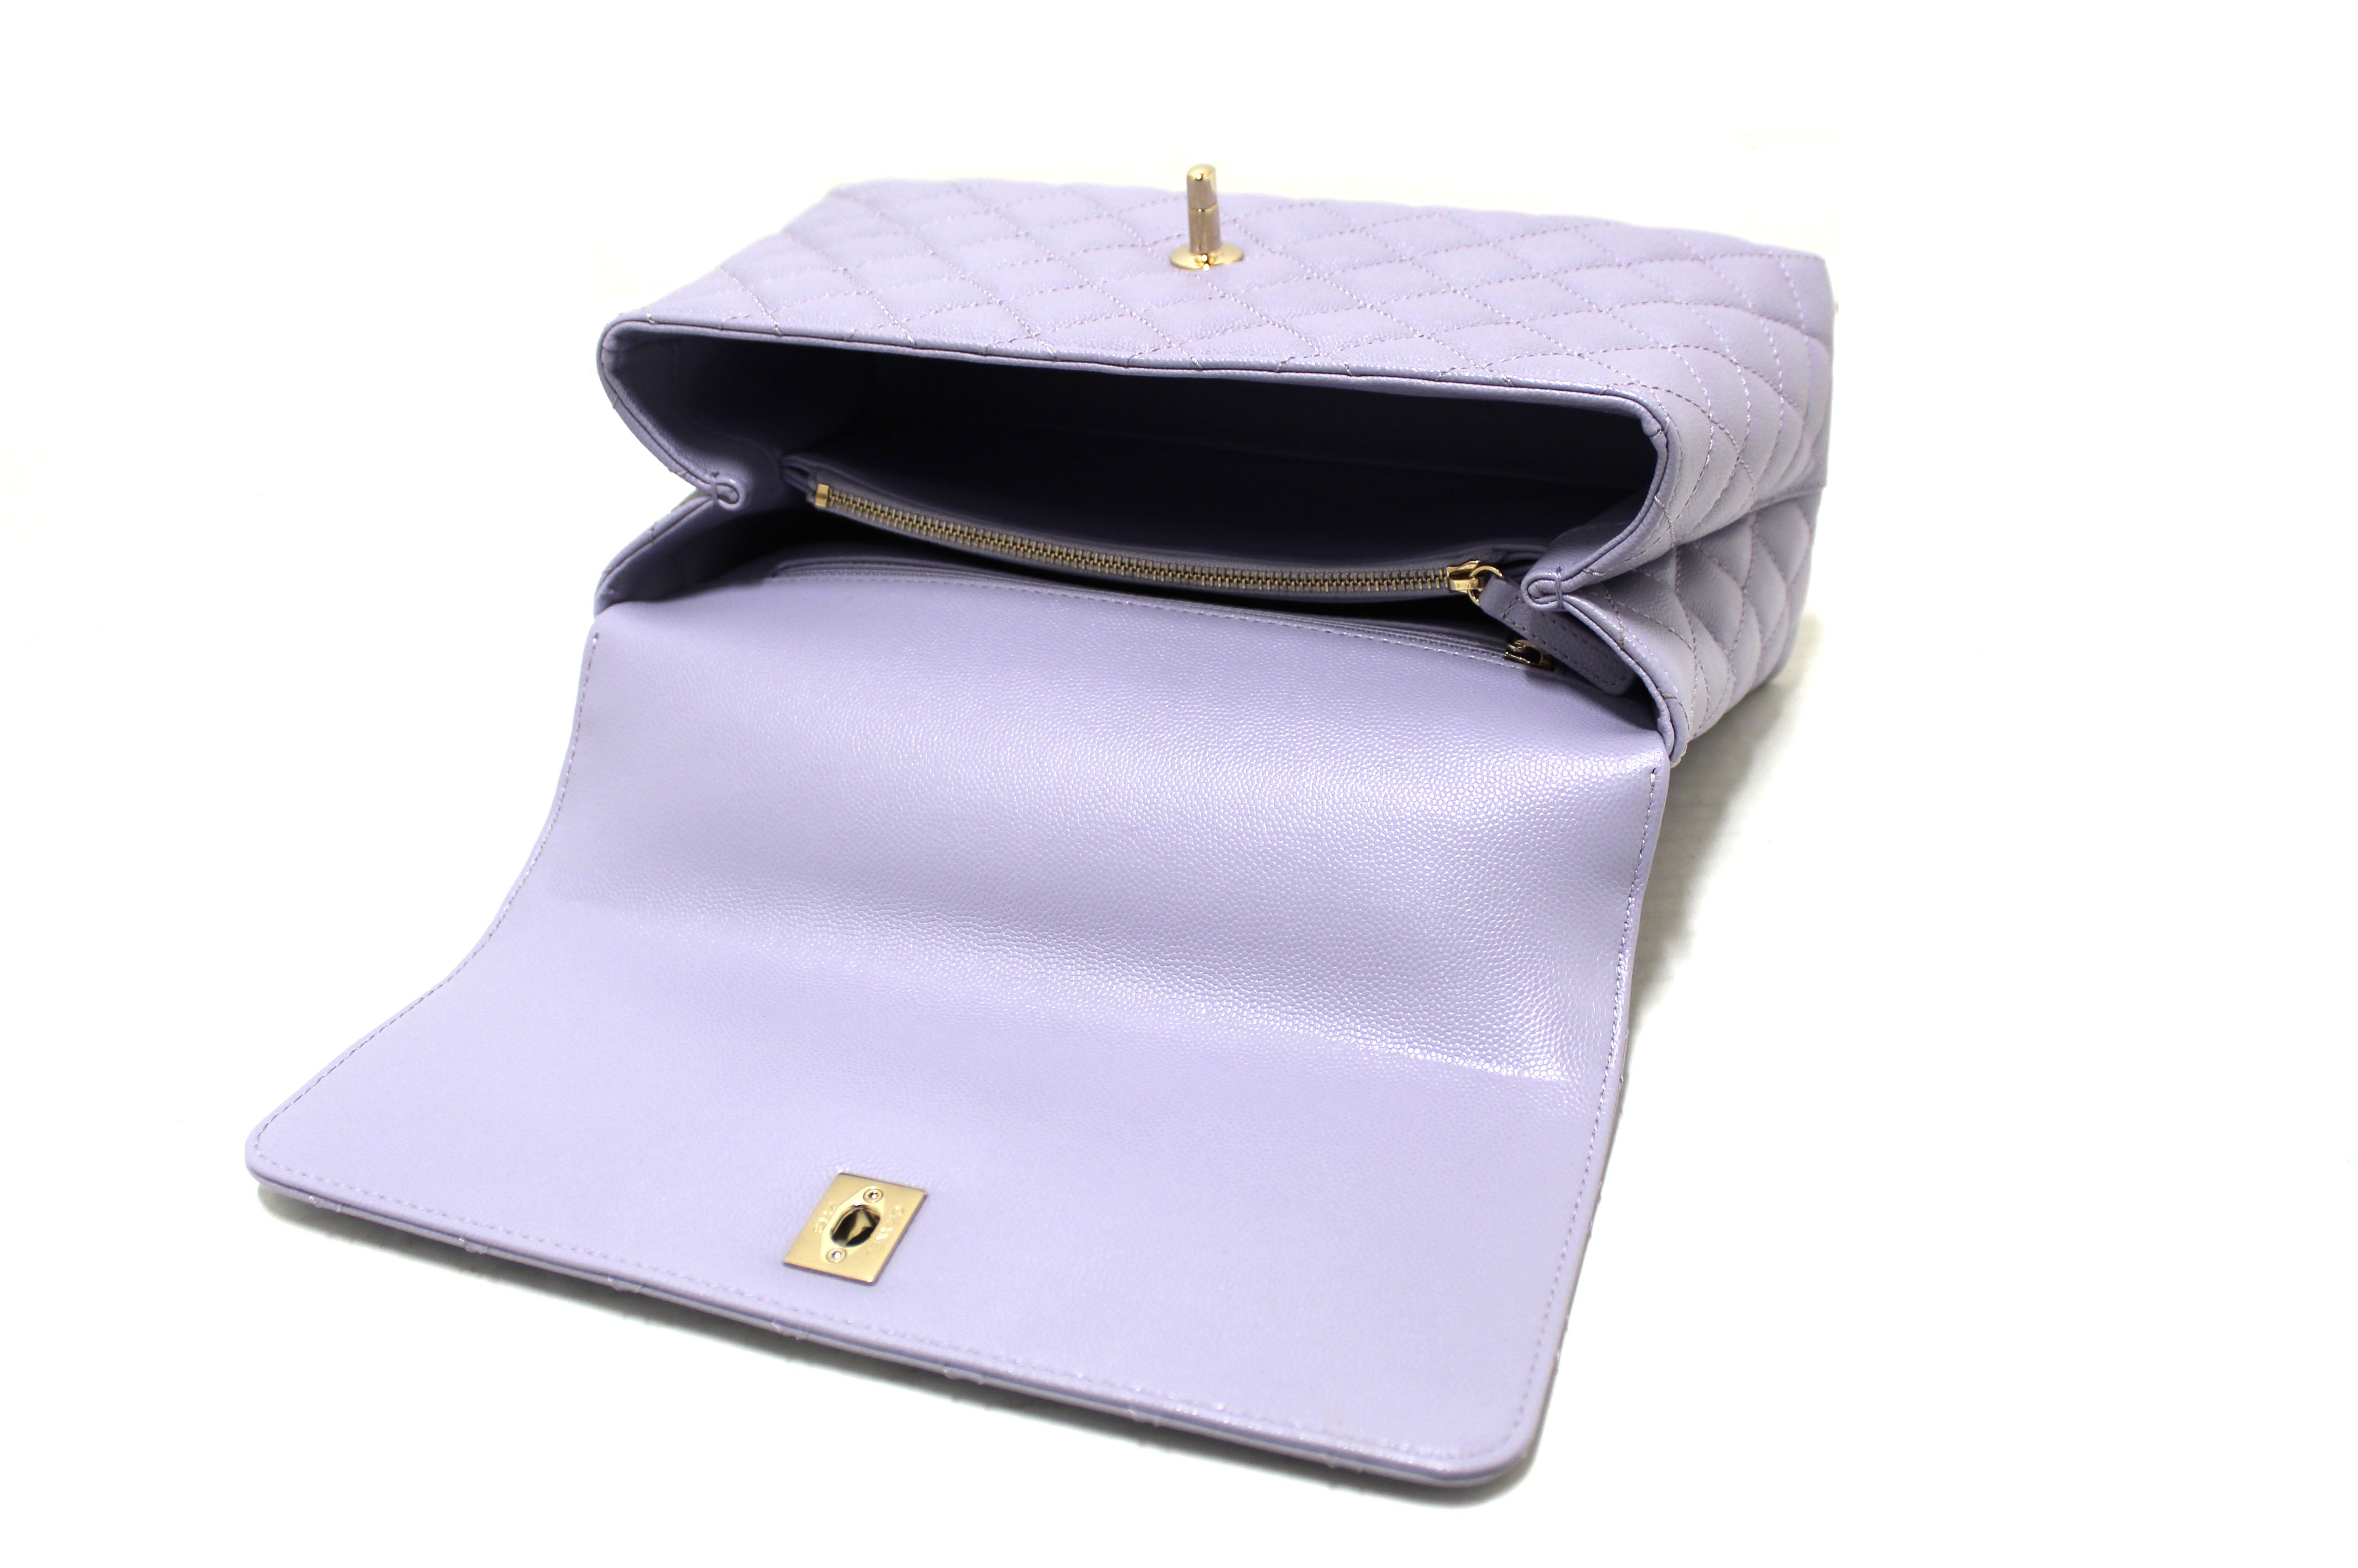 Chanel 2020 Purple Caviar Classic Medium Double Flap Bag w